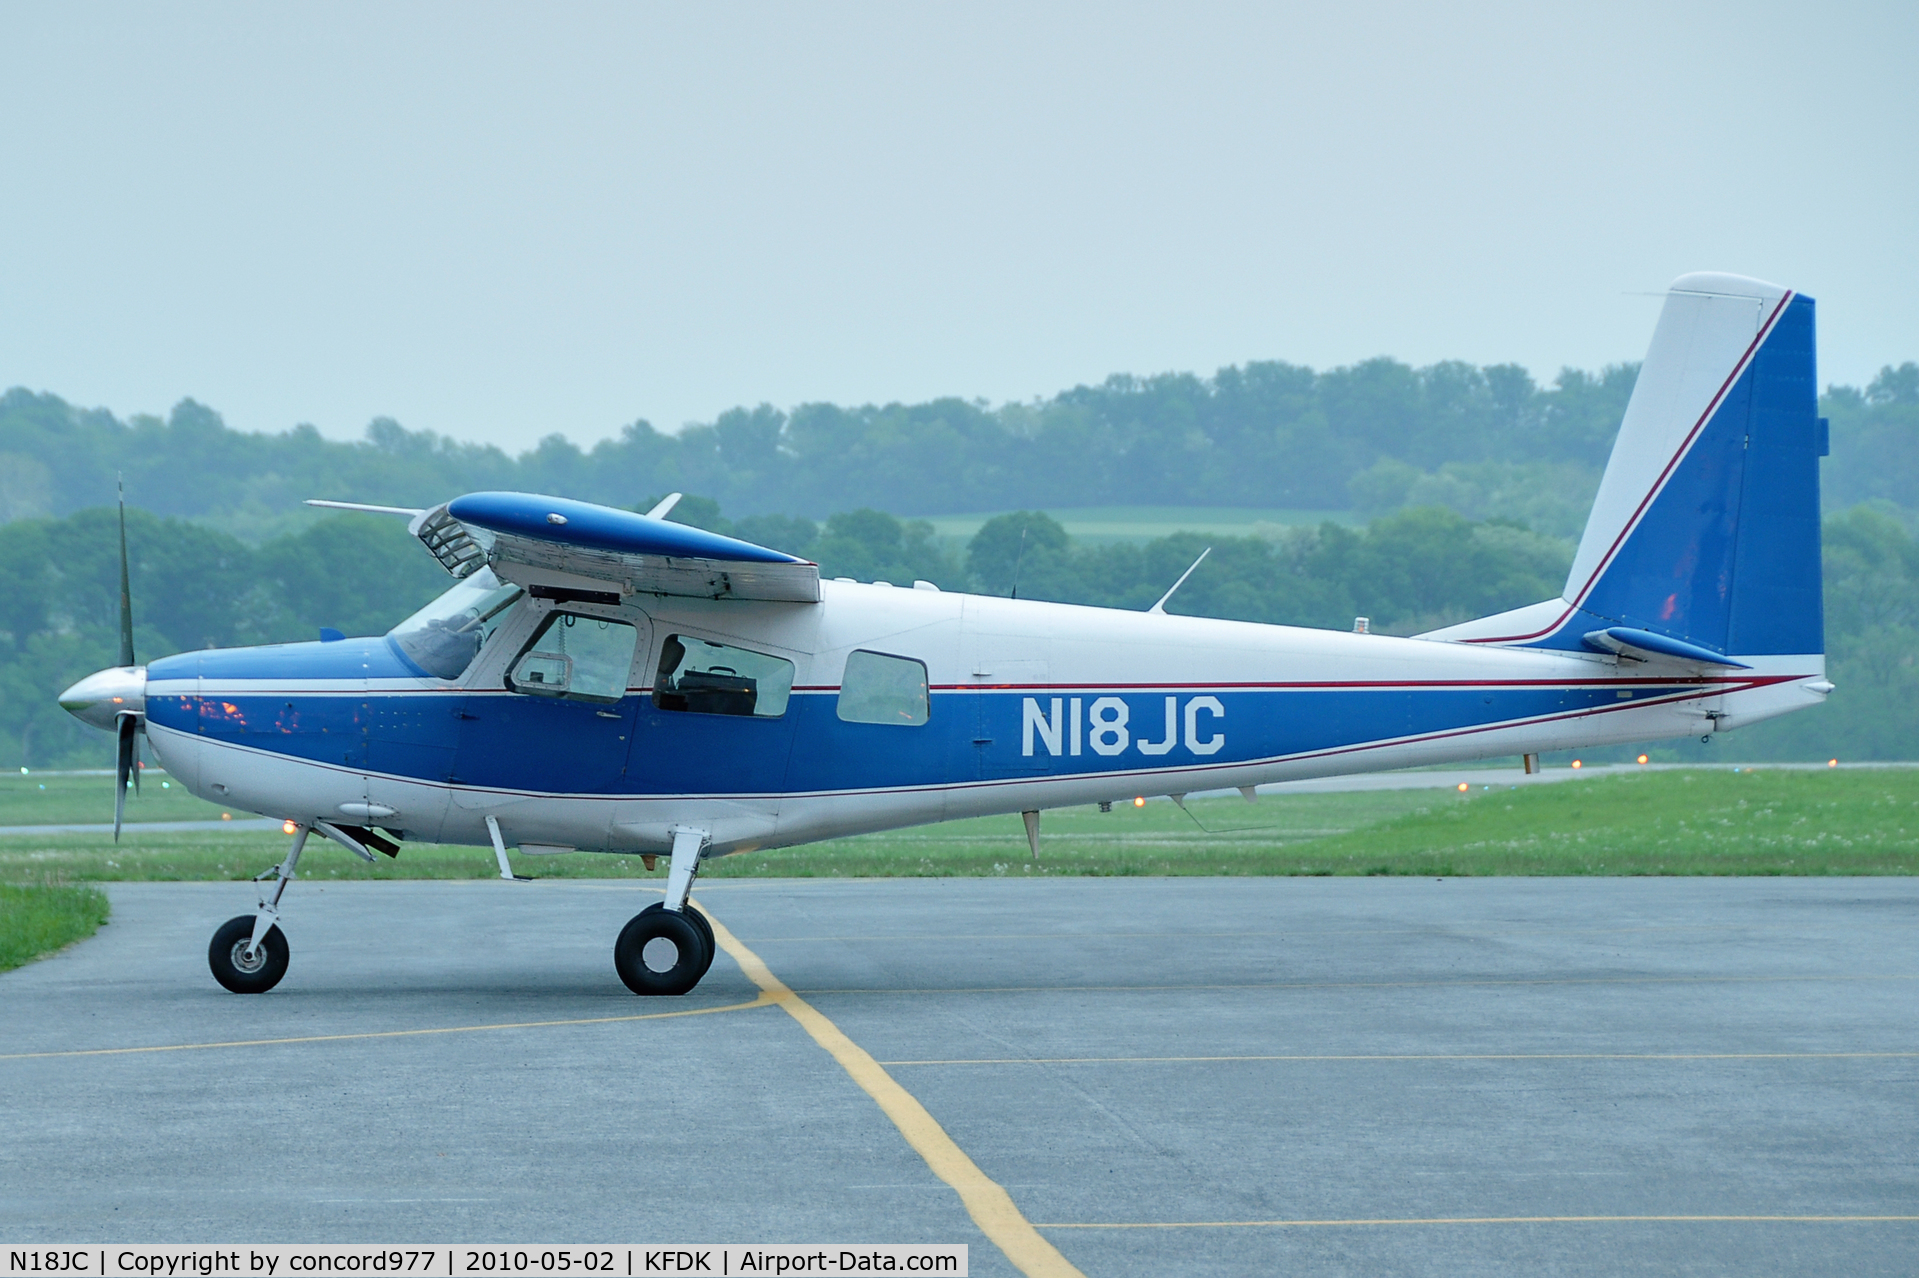 N18JC, 1974 Helio HT-295 Super Courier C/N 1719, Seen at KFDK on 5/2/2010.